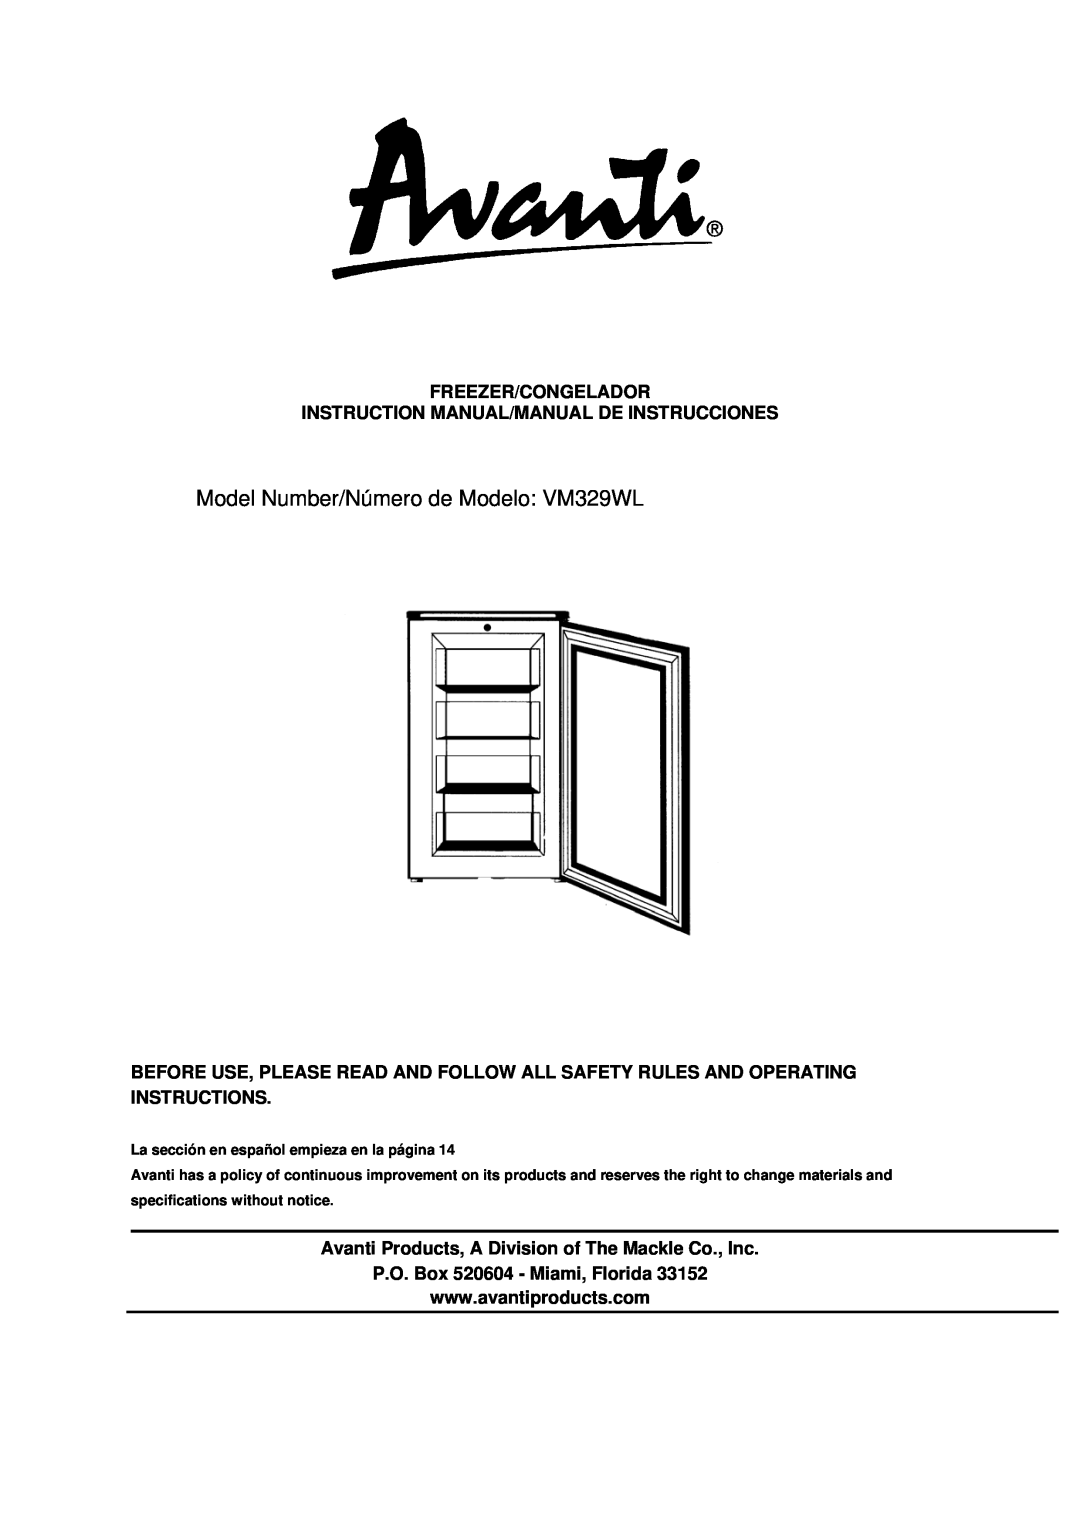 Avanti instruction manual Model Number/Número de Modelo VM329WL, Freezer/Congelador, P.O. Box 520604 - Miami, Florida 